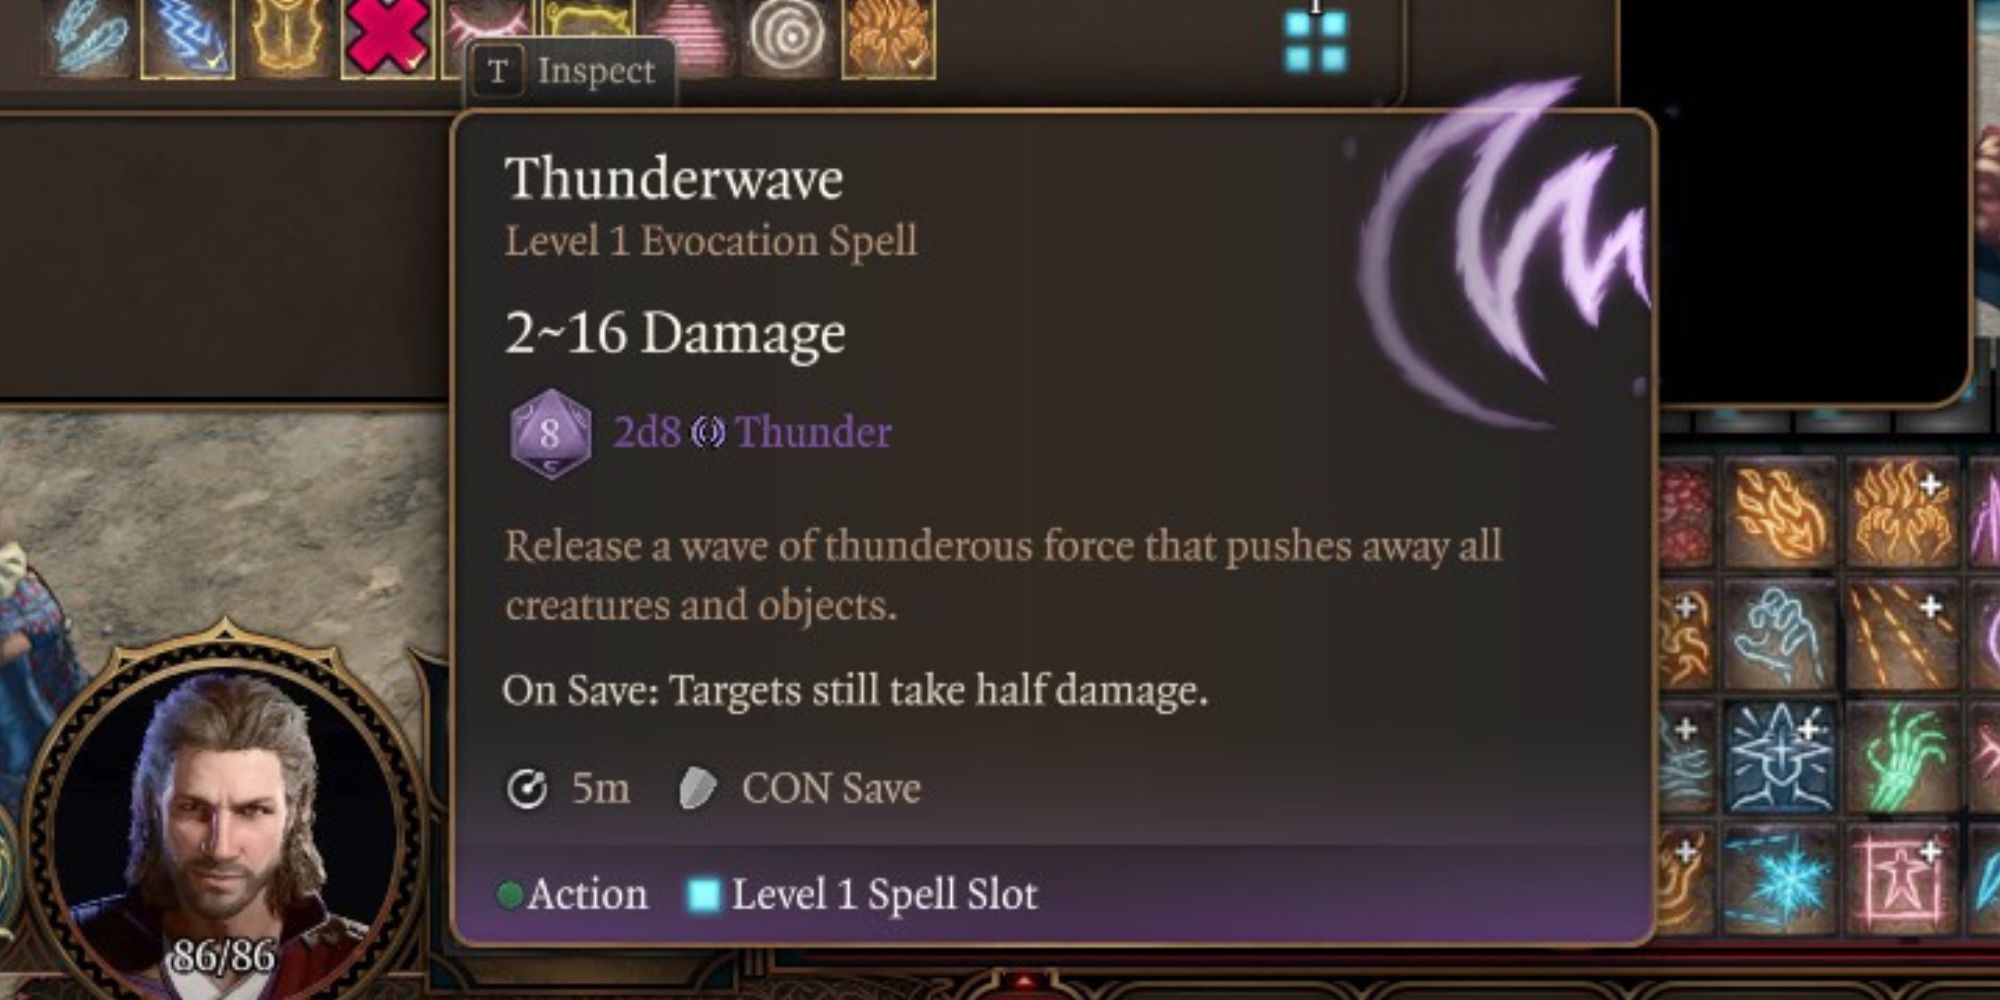 Thunderwave spell in inventory screen in Baldur's Gate 3